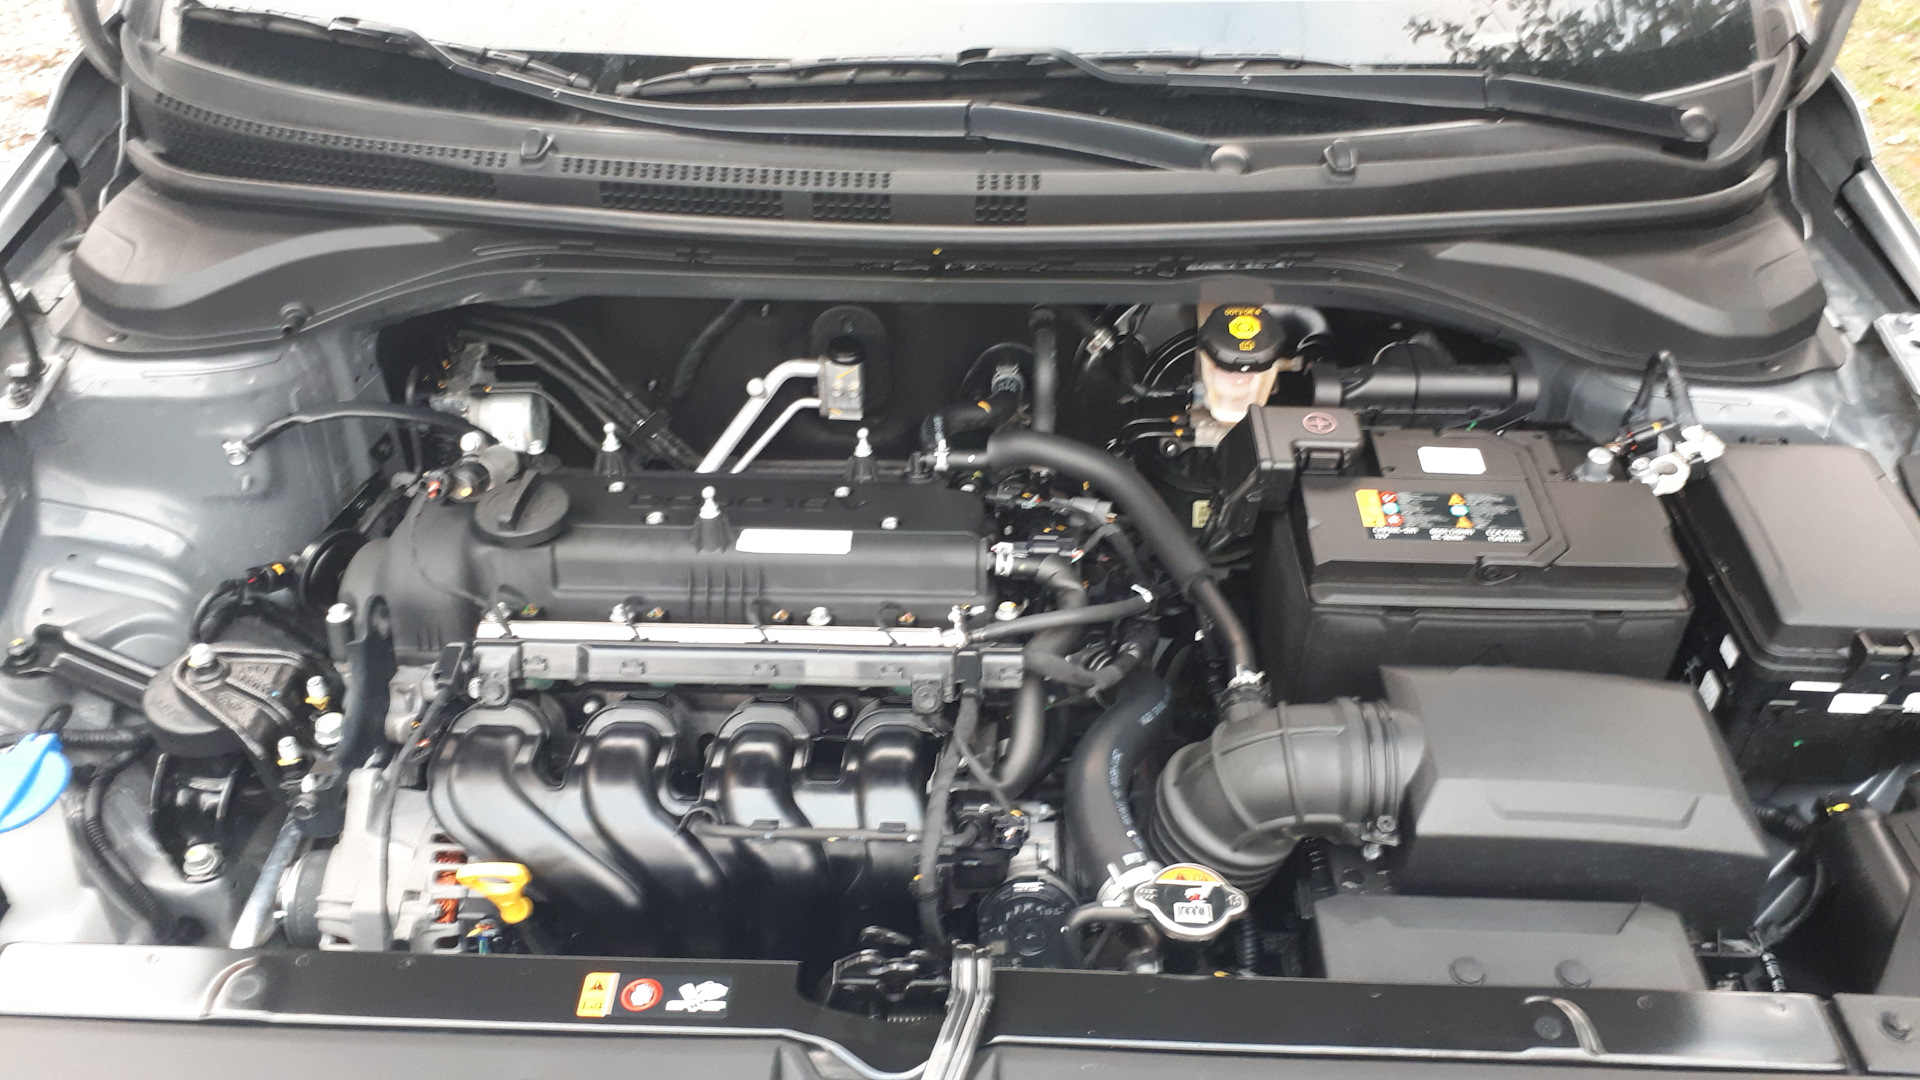 Двигатель на хендай солярис 1.6 цена. Мотор Солярис 1.6 2011. Двигатель Хендай Солярис 1.6. Двигатель Хендай Солярис 1.4. Двигатель Солярис 2017.